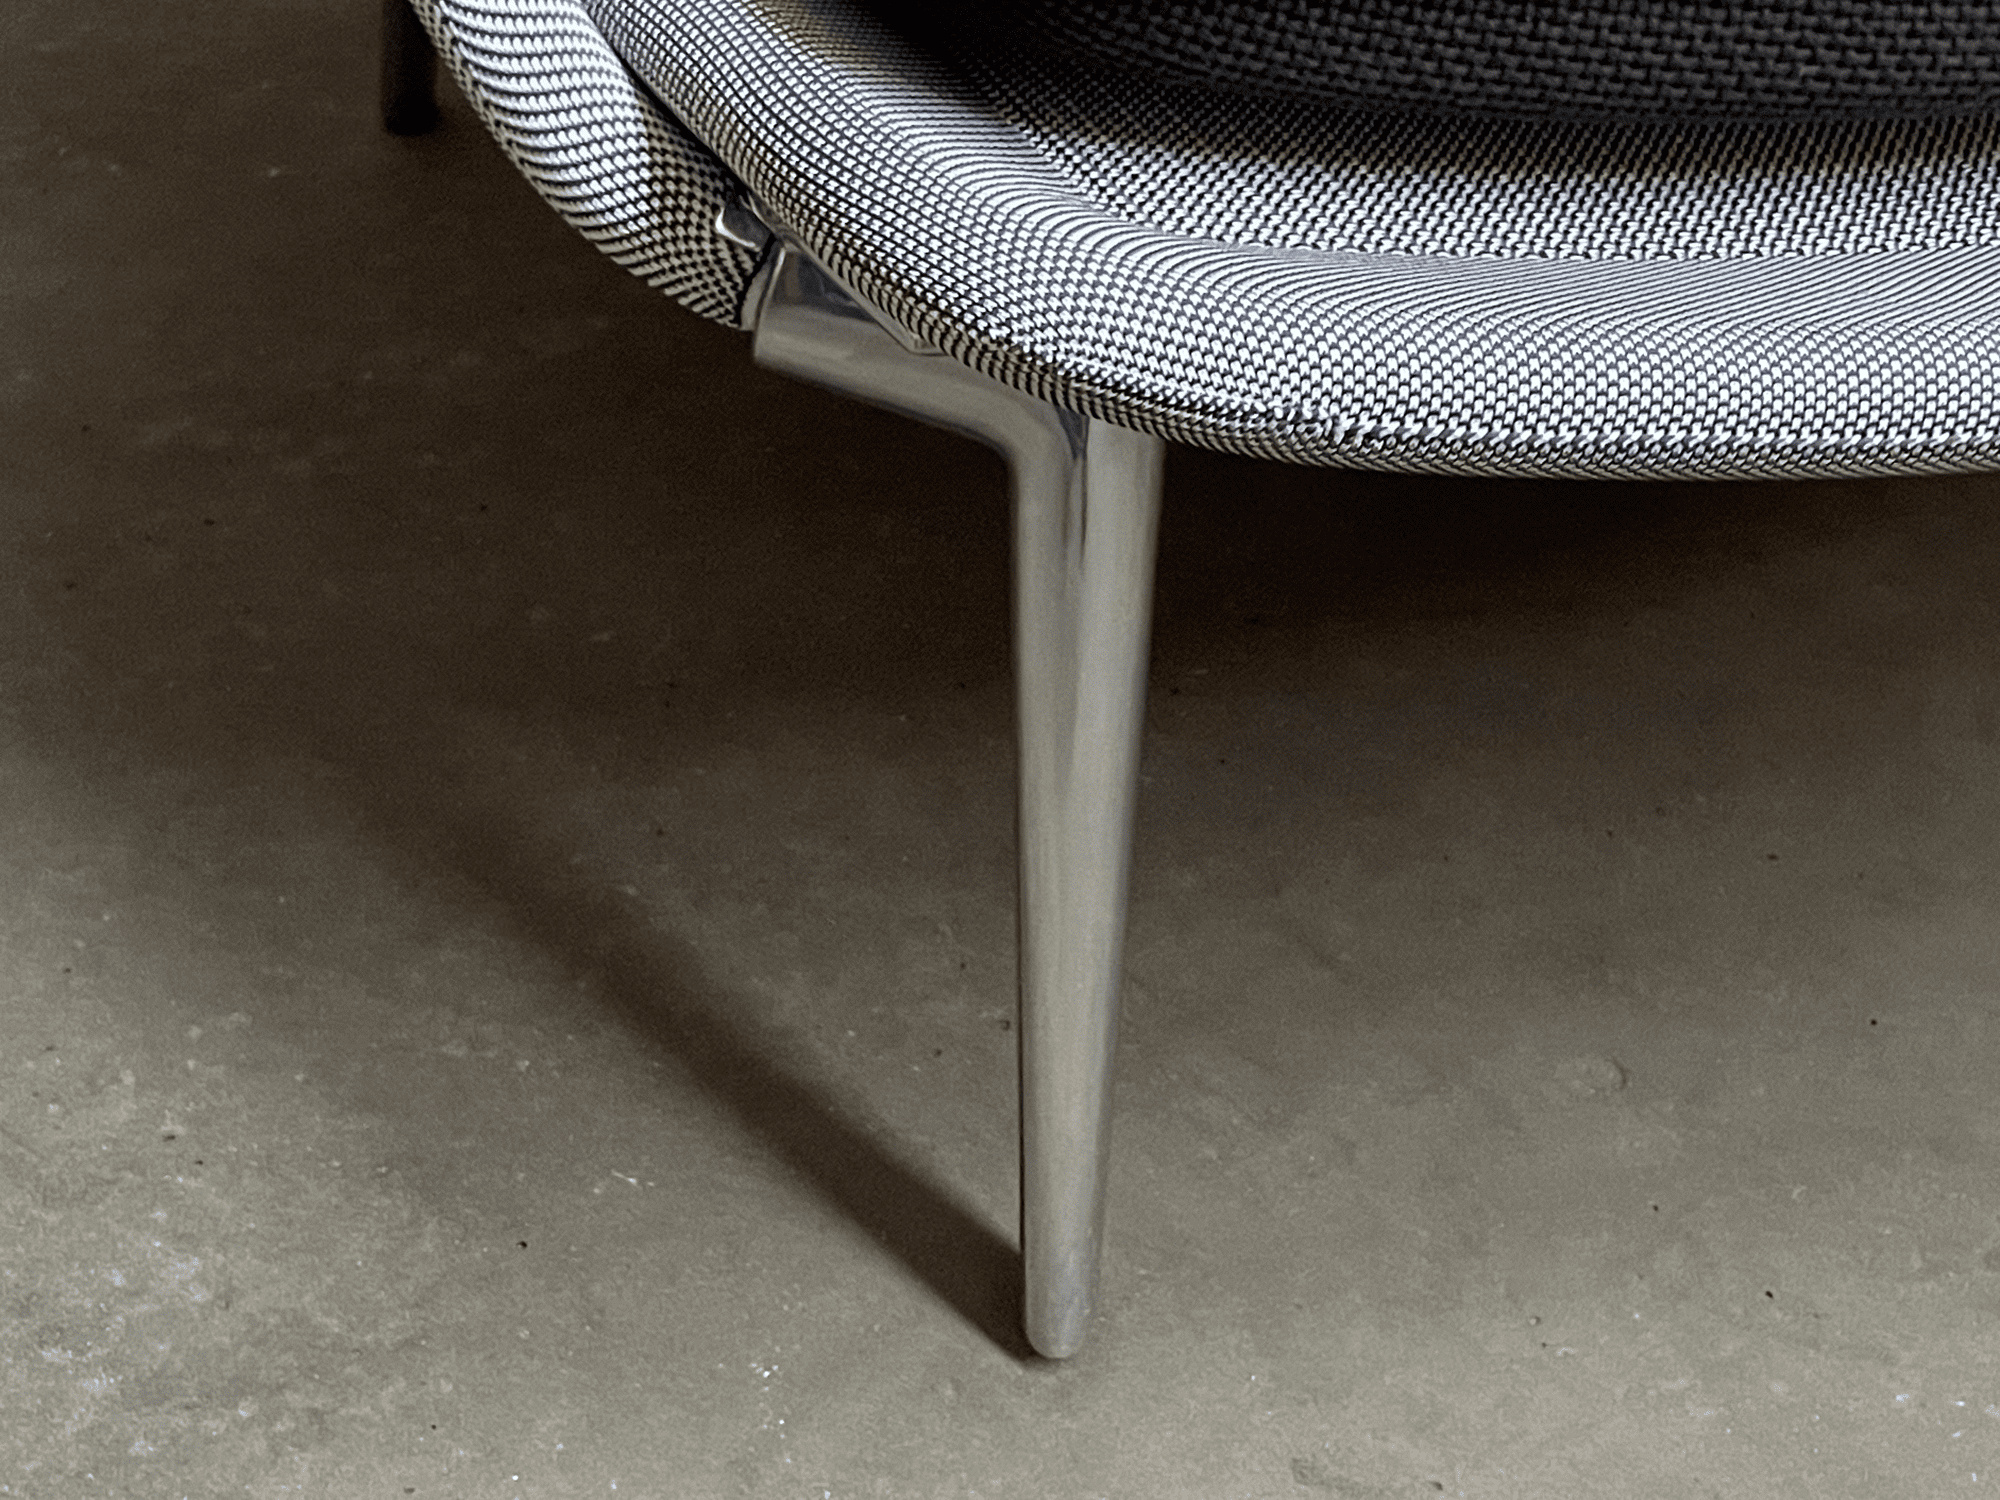 vitra-sessel-slow-chair-bezug-tricot-braun-creme-gestell-aluminium-poliert-mf-0008205-001